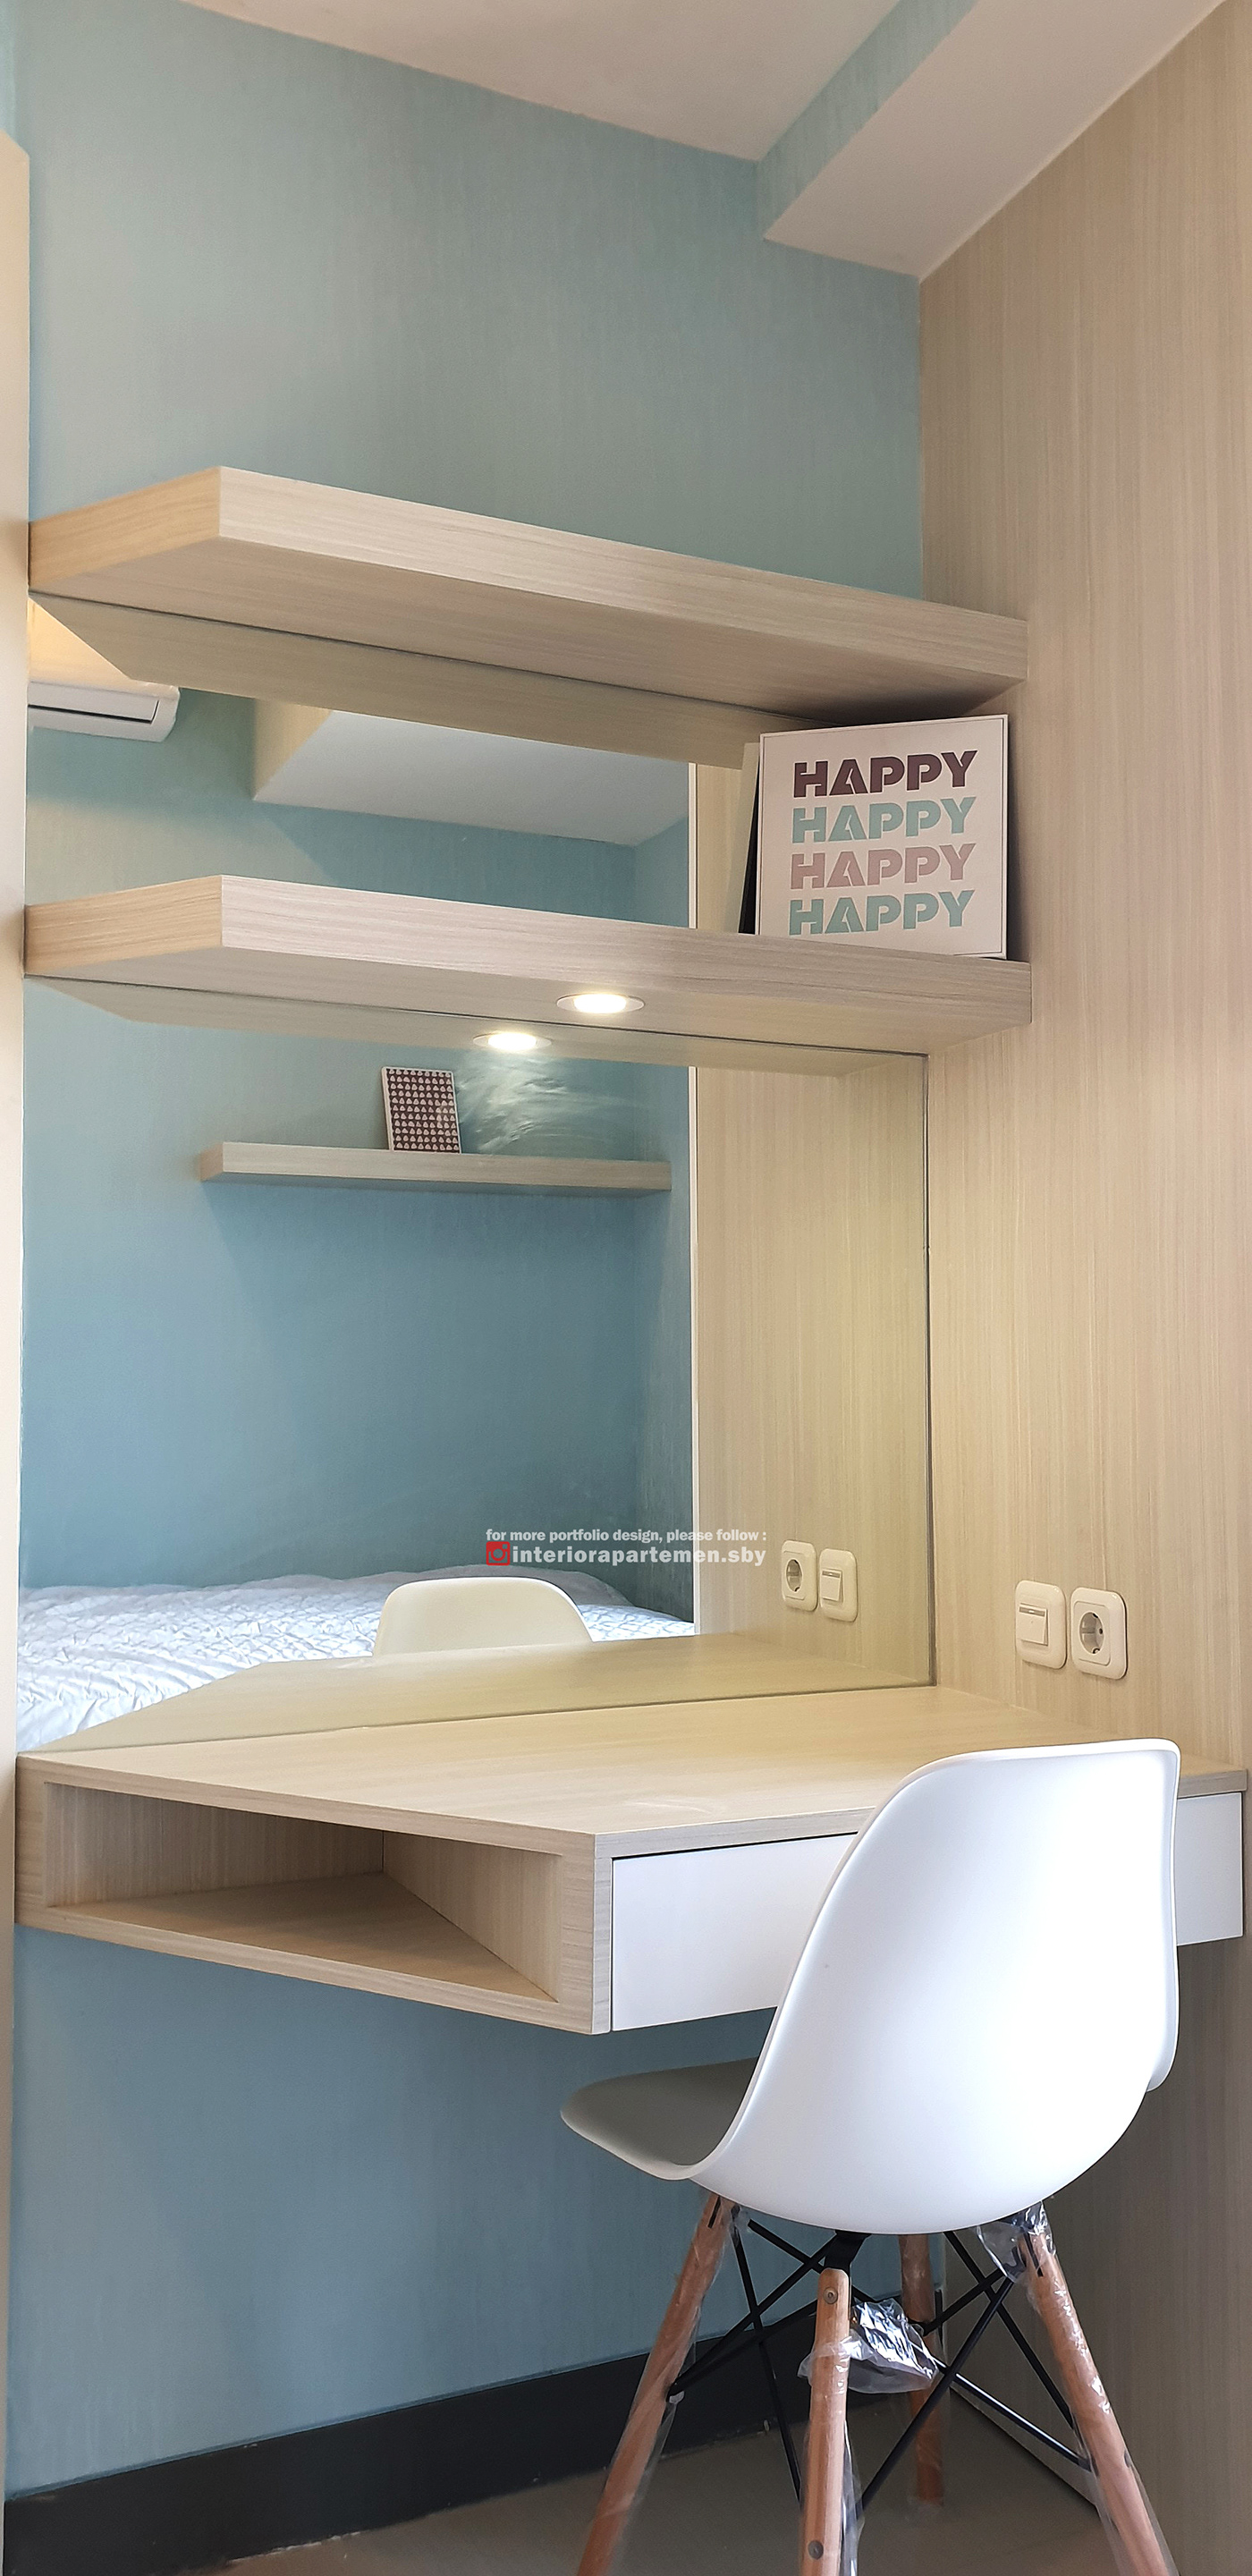 childbedroom bedroom interior design  Interior furniture furnituredesign design decor architecture bedroominterior